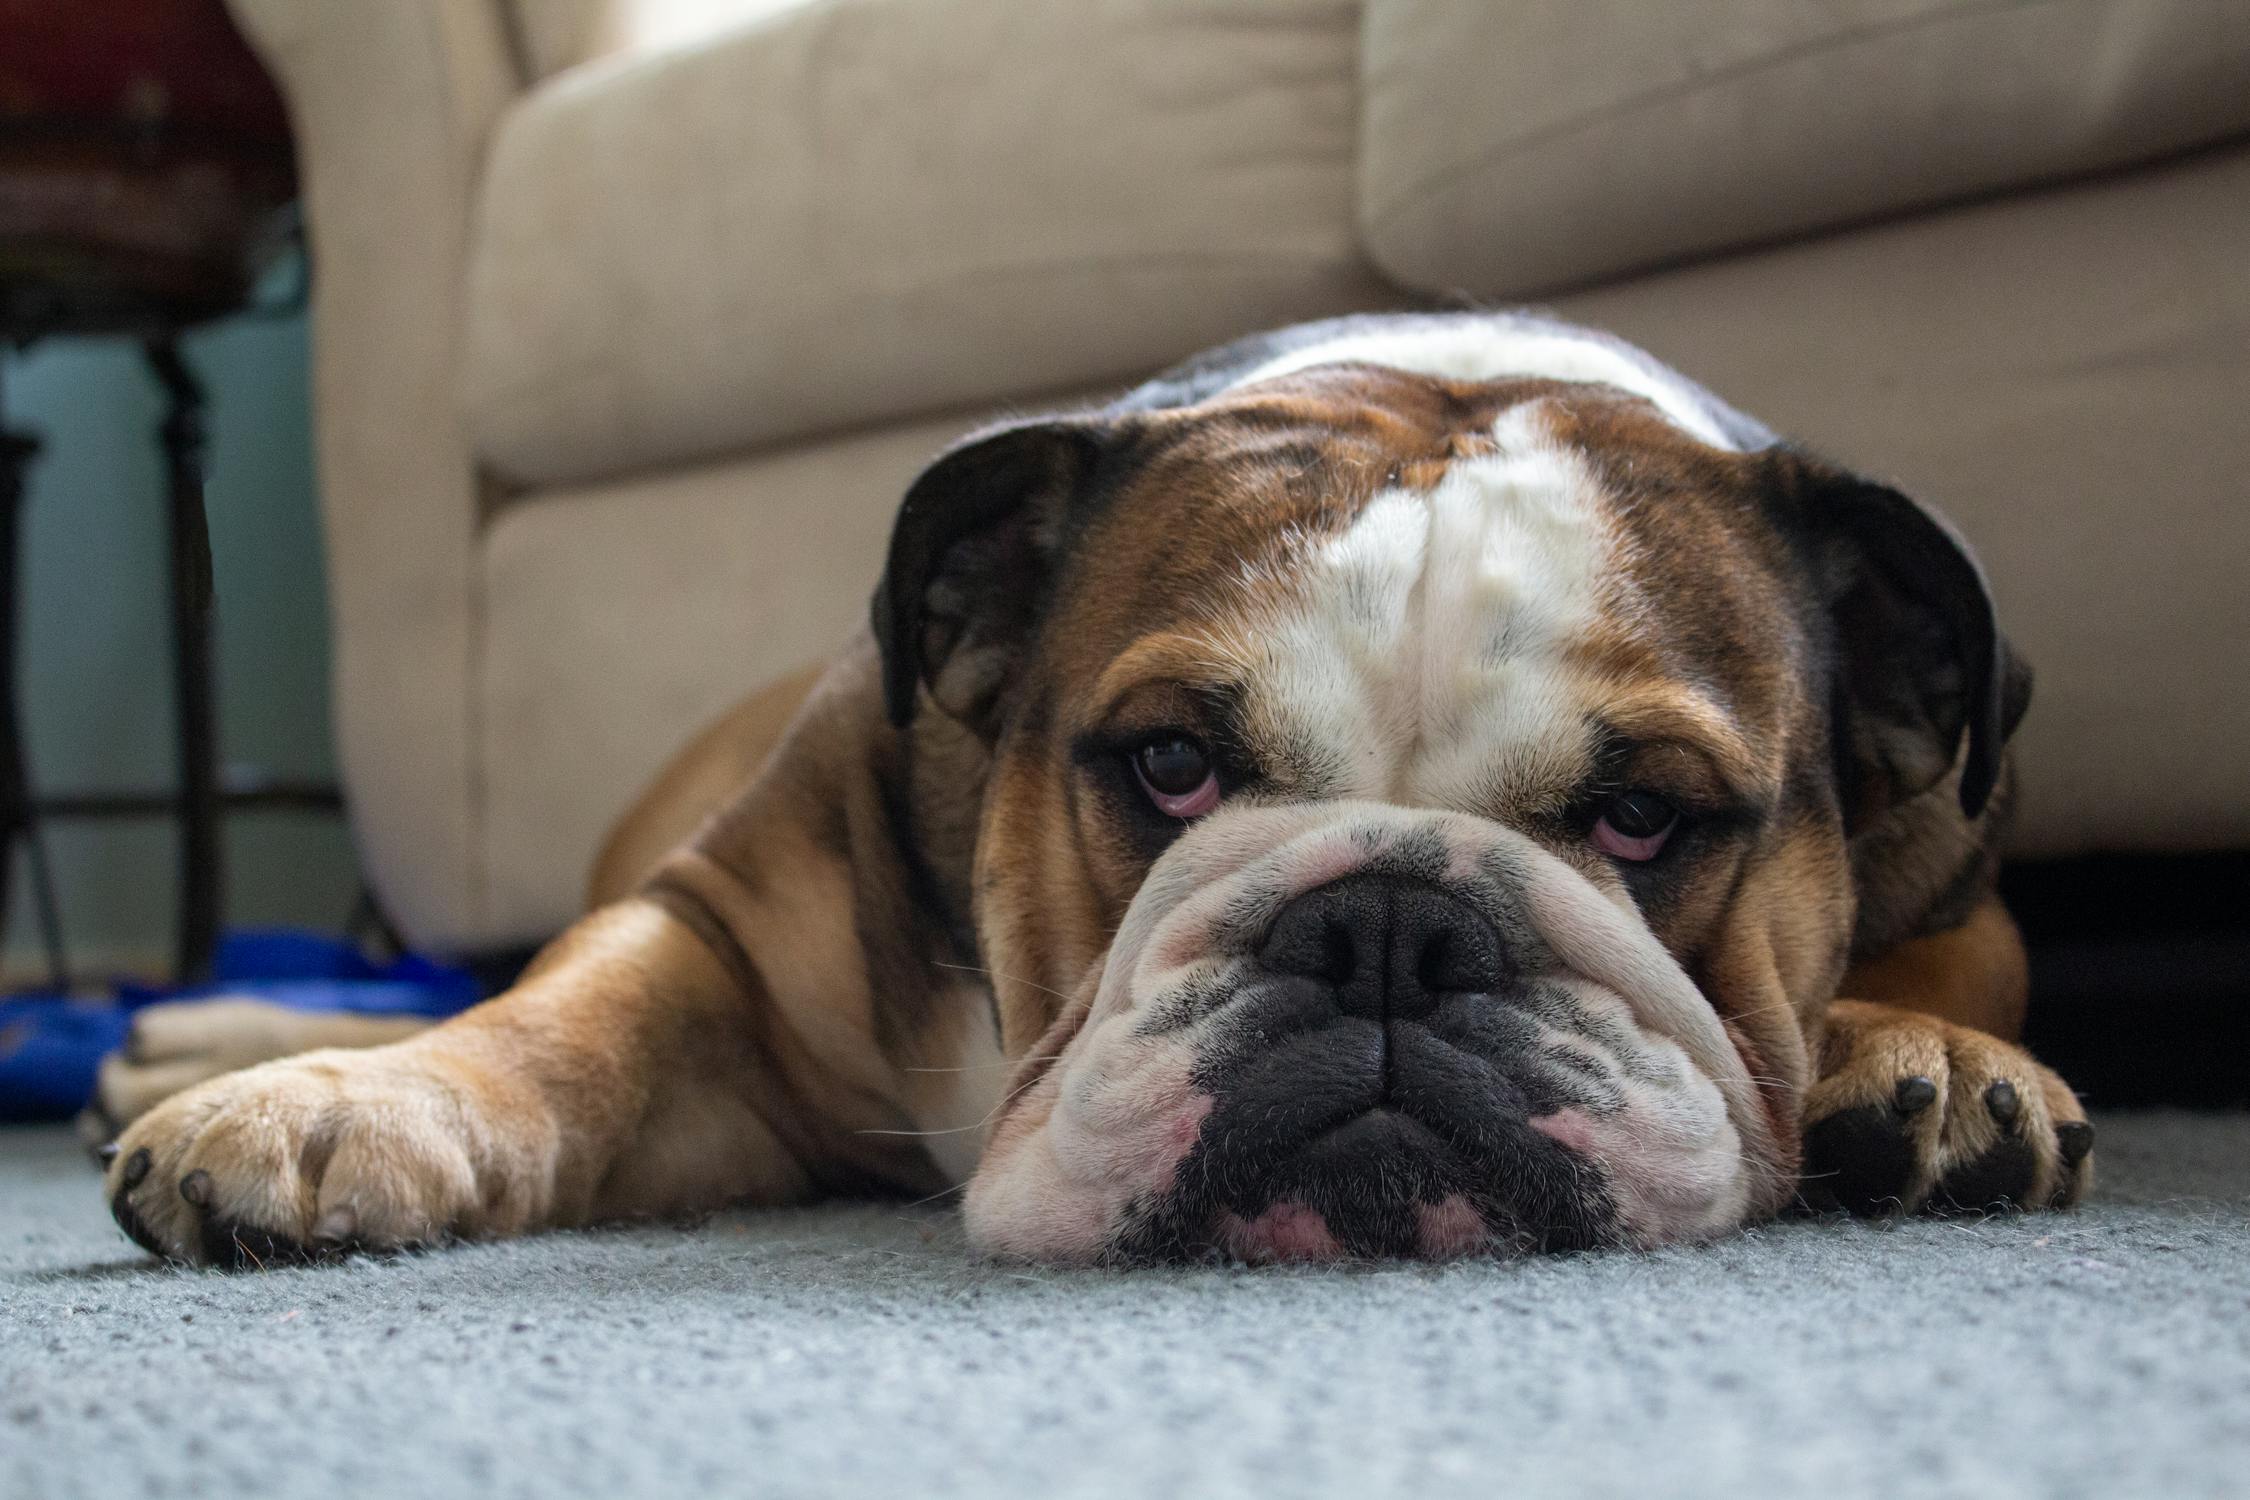 An English bulldog lies on the floor.